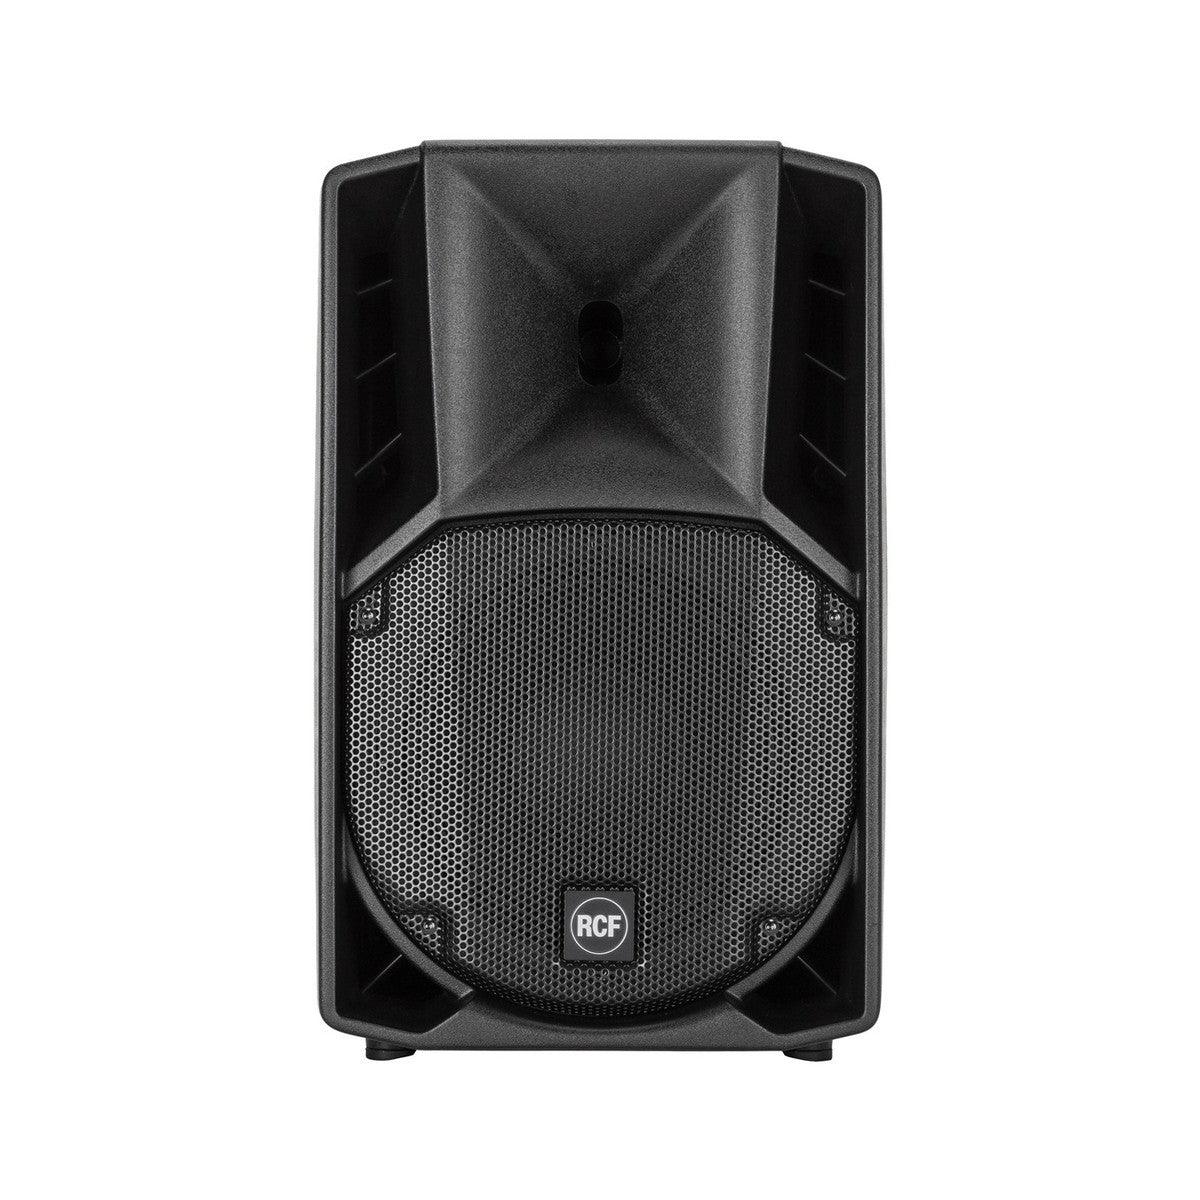 RCF ART 710-A MK4 Active Speaker - DY Pro Audio